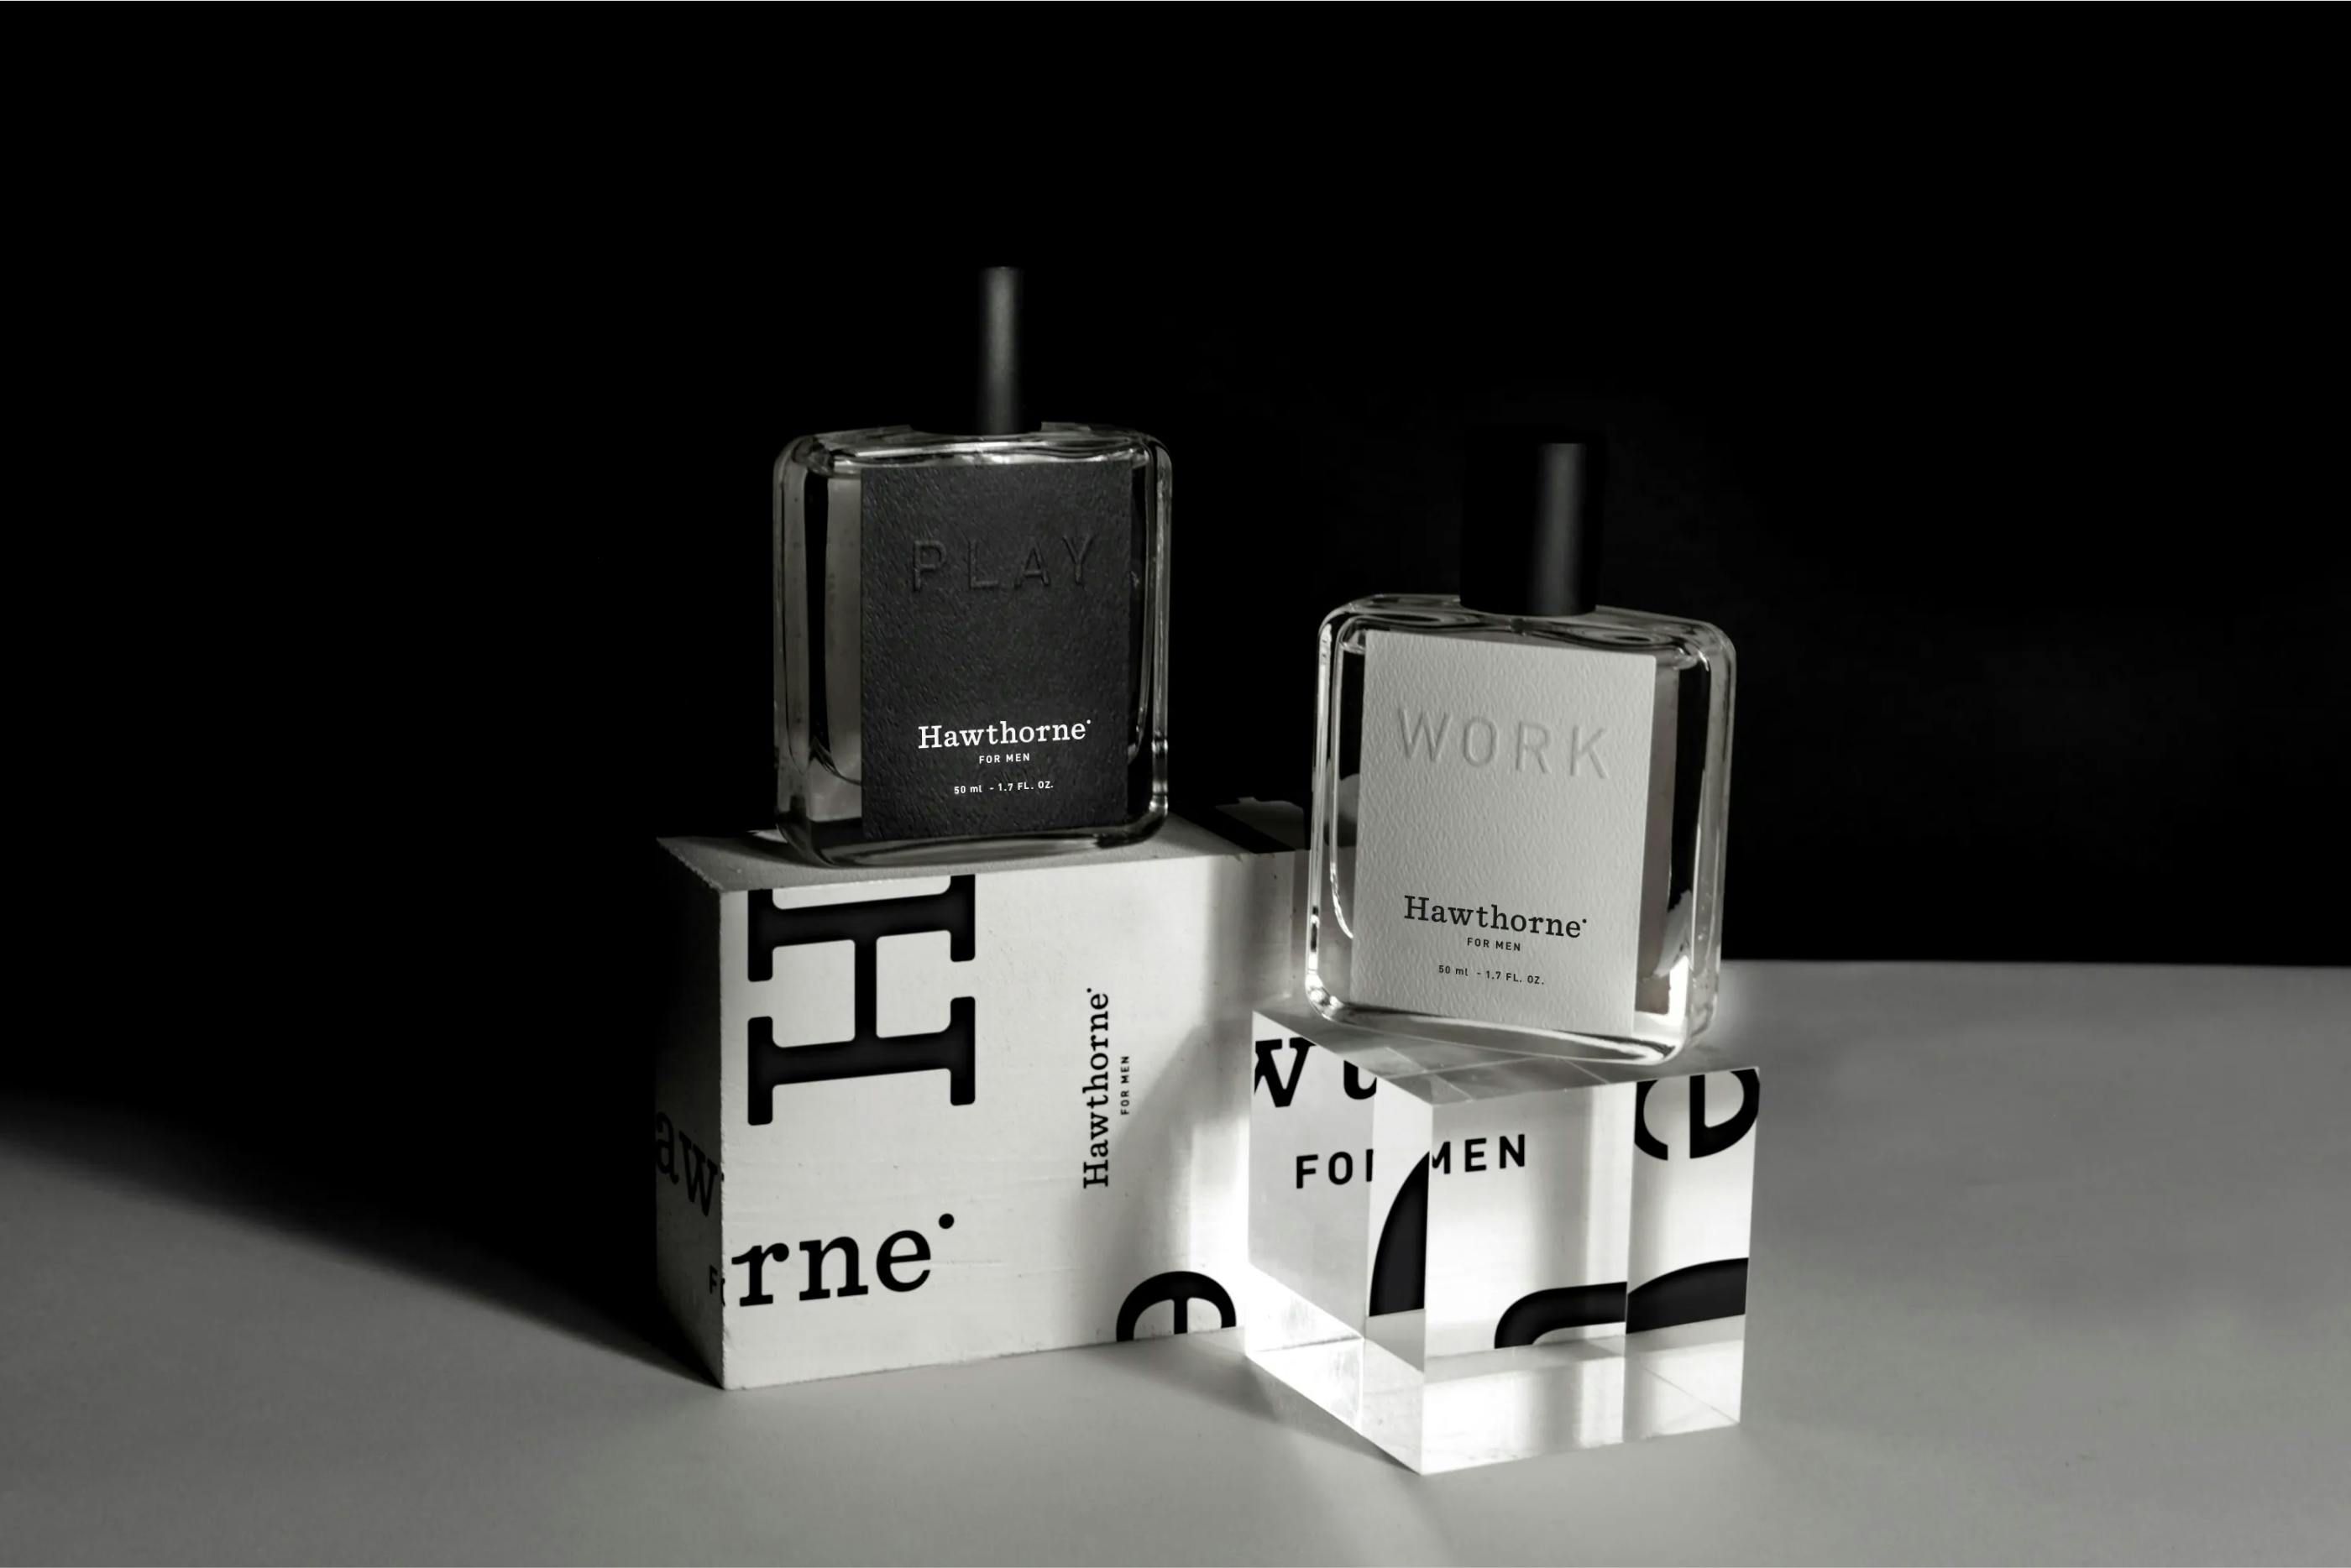 2 bottles of Hawthorne perfume sitting against a dark background